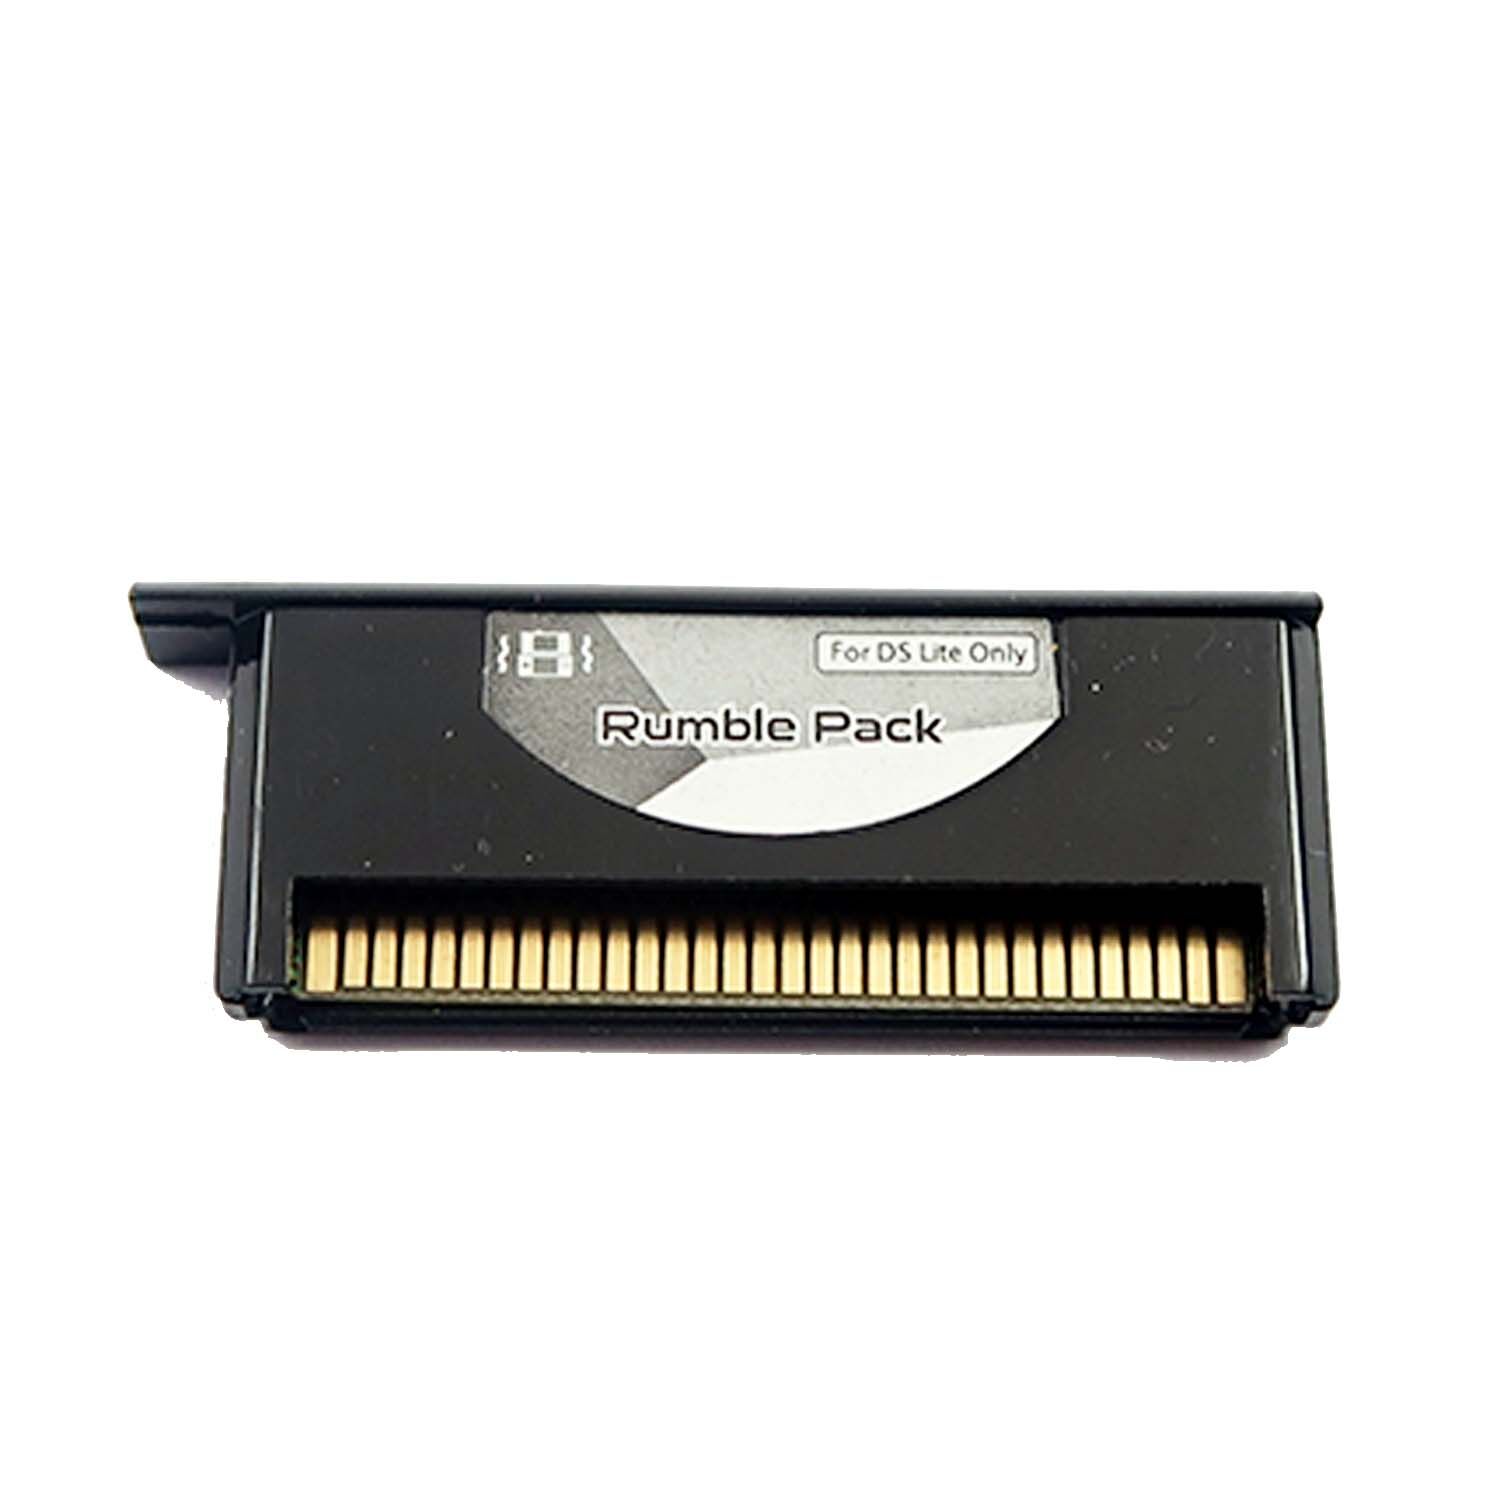 Rumble Pack - Nintendo DS Lite